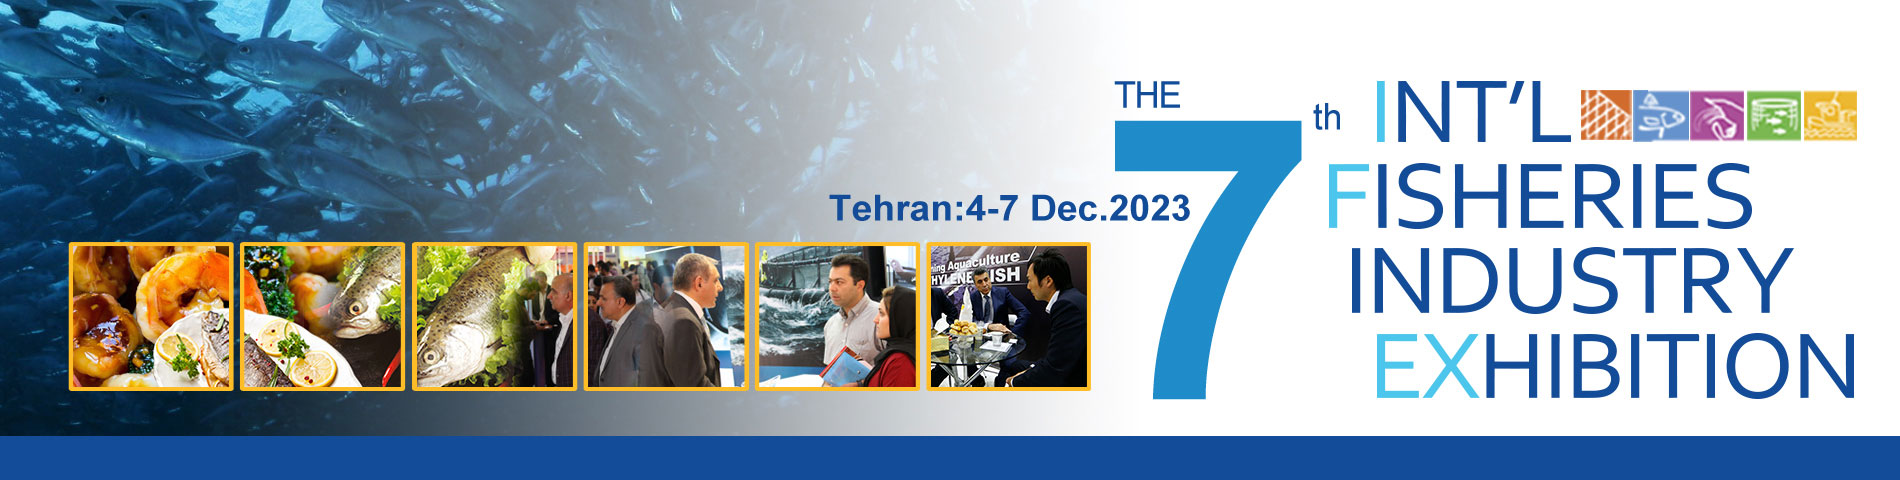 1678911796 header 4 - The 7th International Fisheries Industry (IFEX) Exhibition 2023 in Iran/Tehran